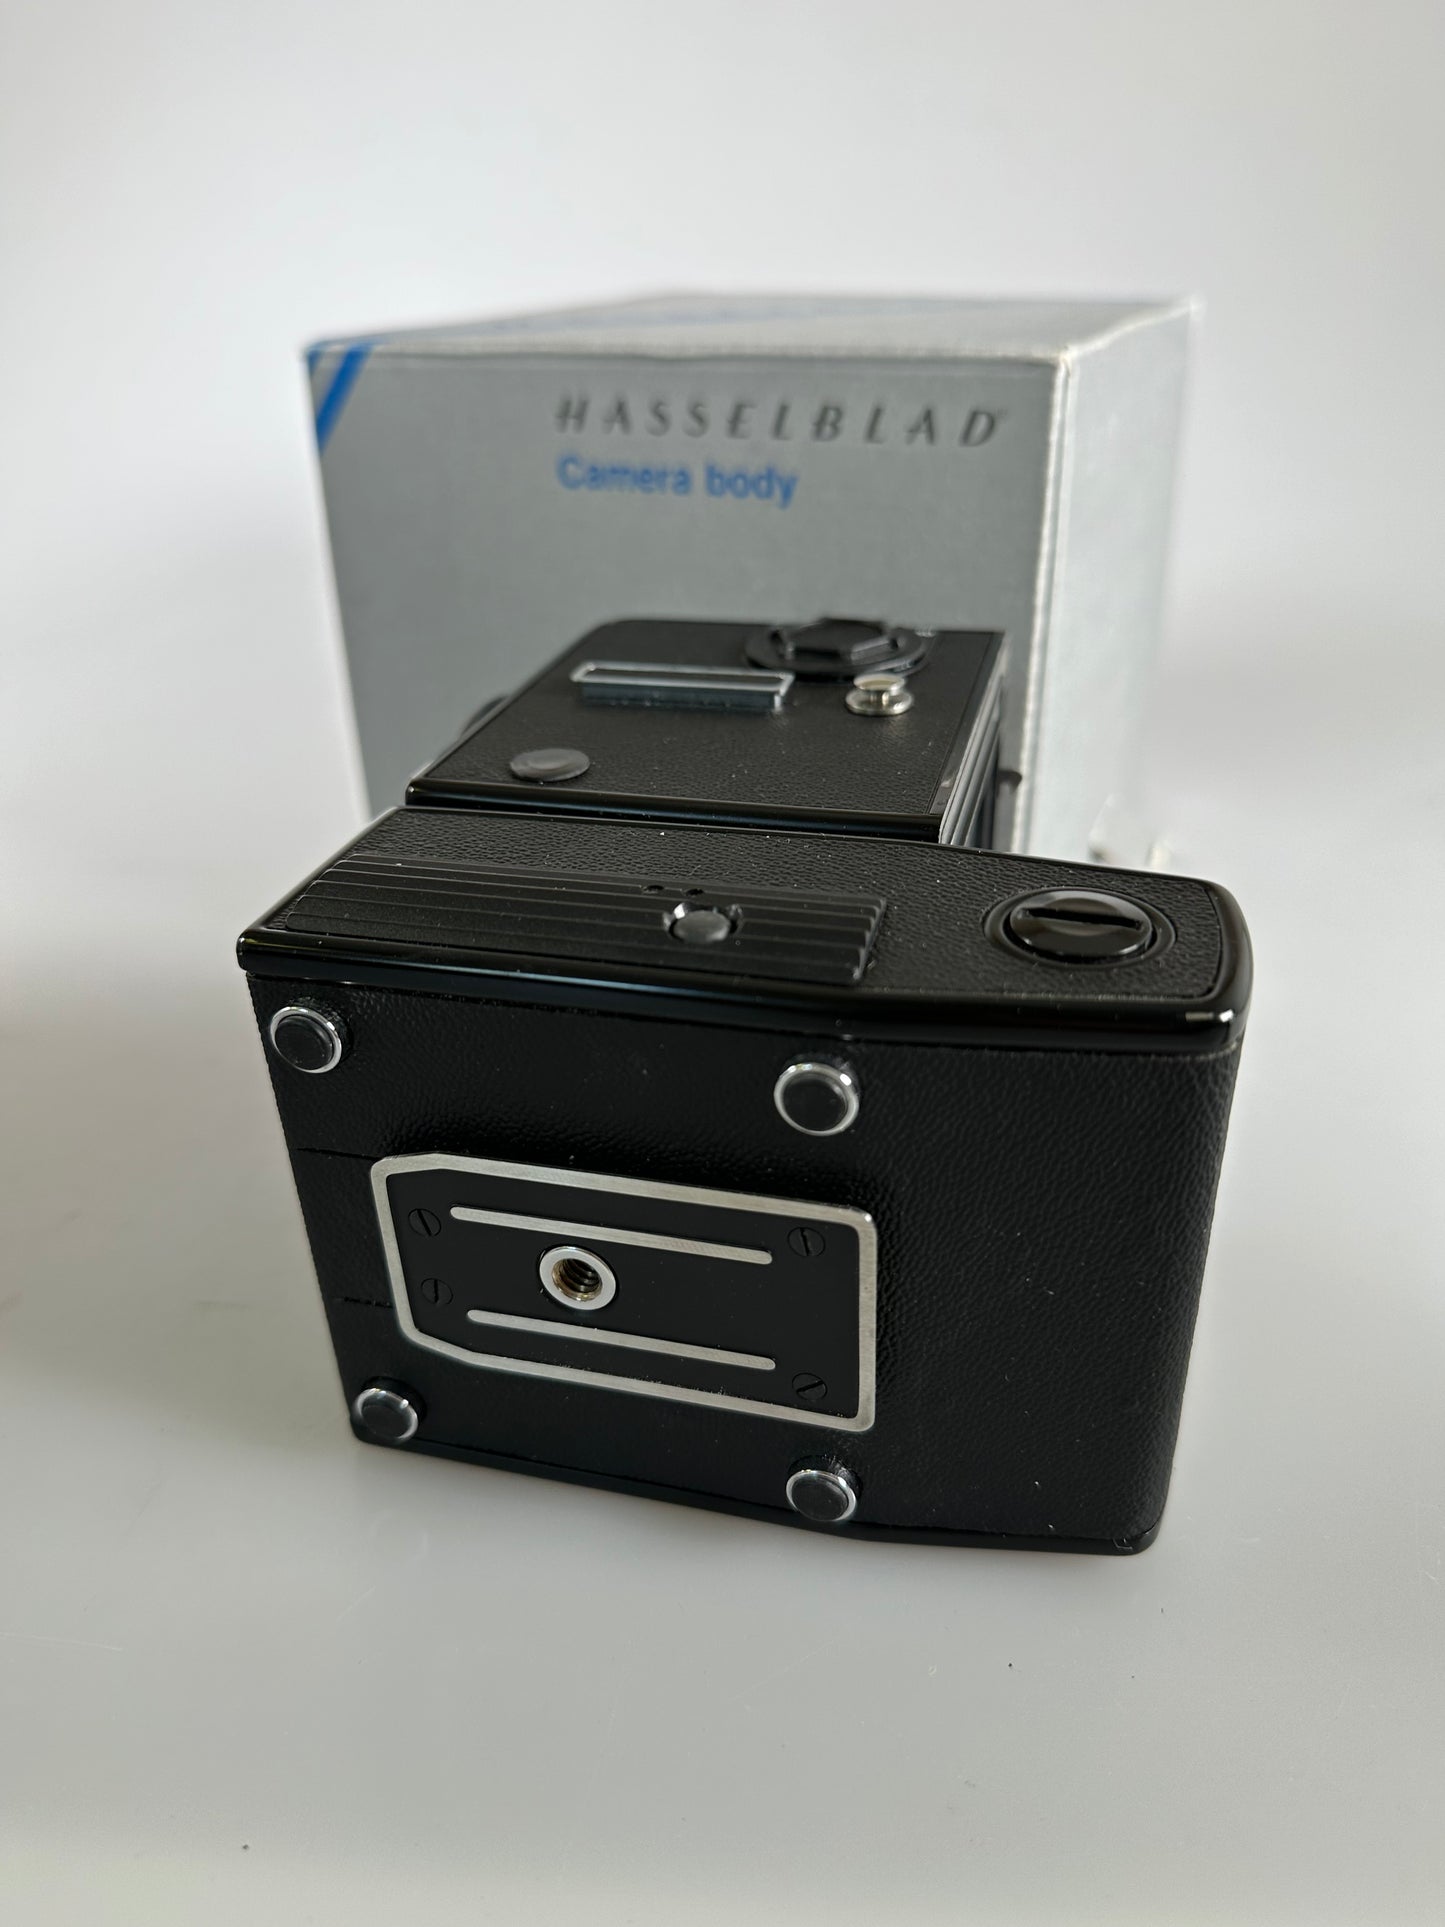 Hasselblad 553ELX 553 ELX Black Medium Format Film Camera Body w/ Waist level finder